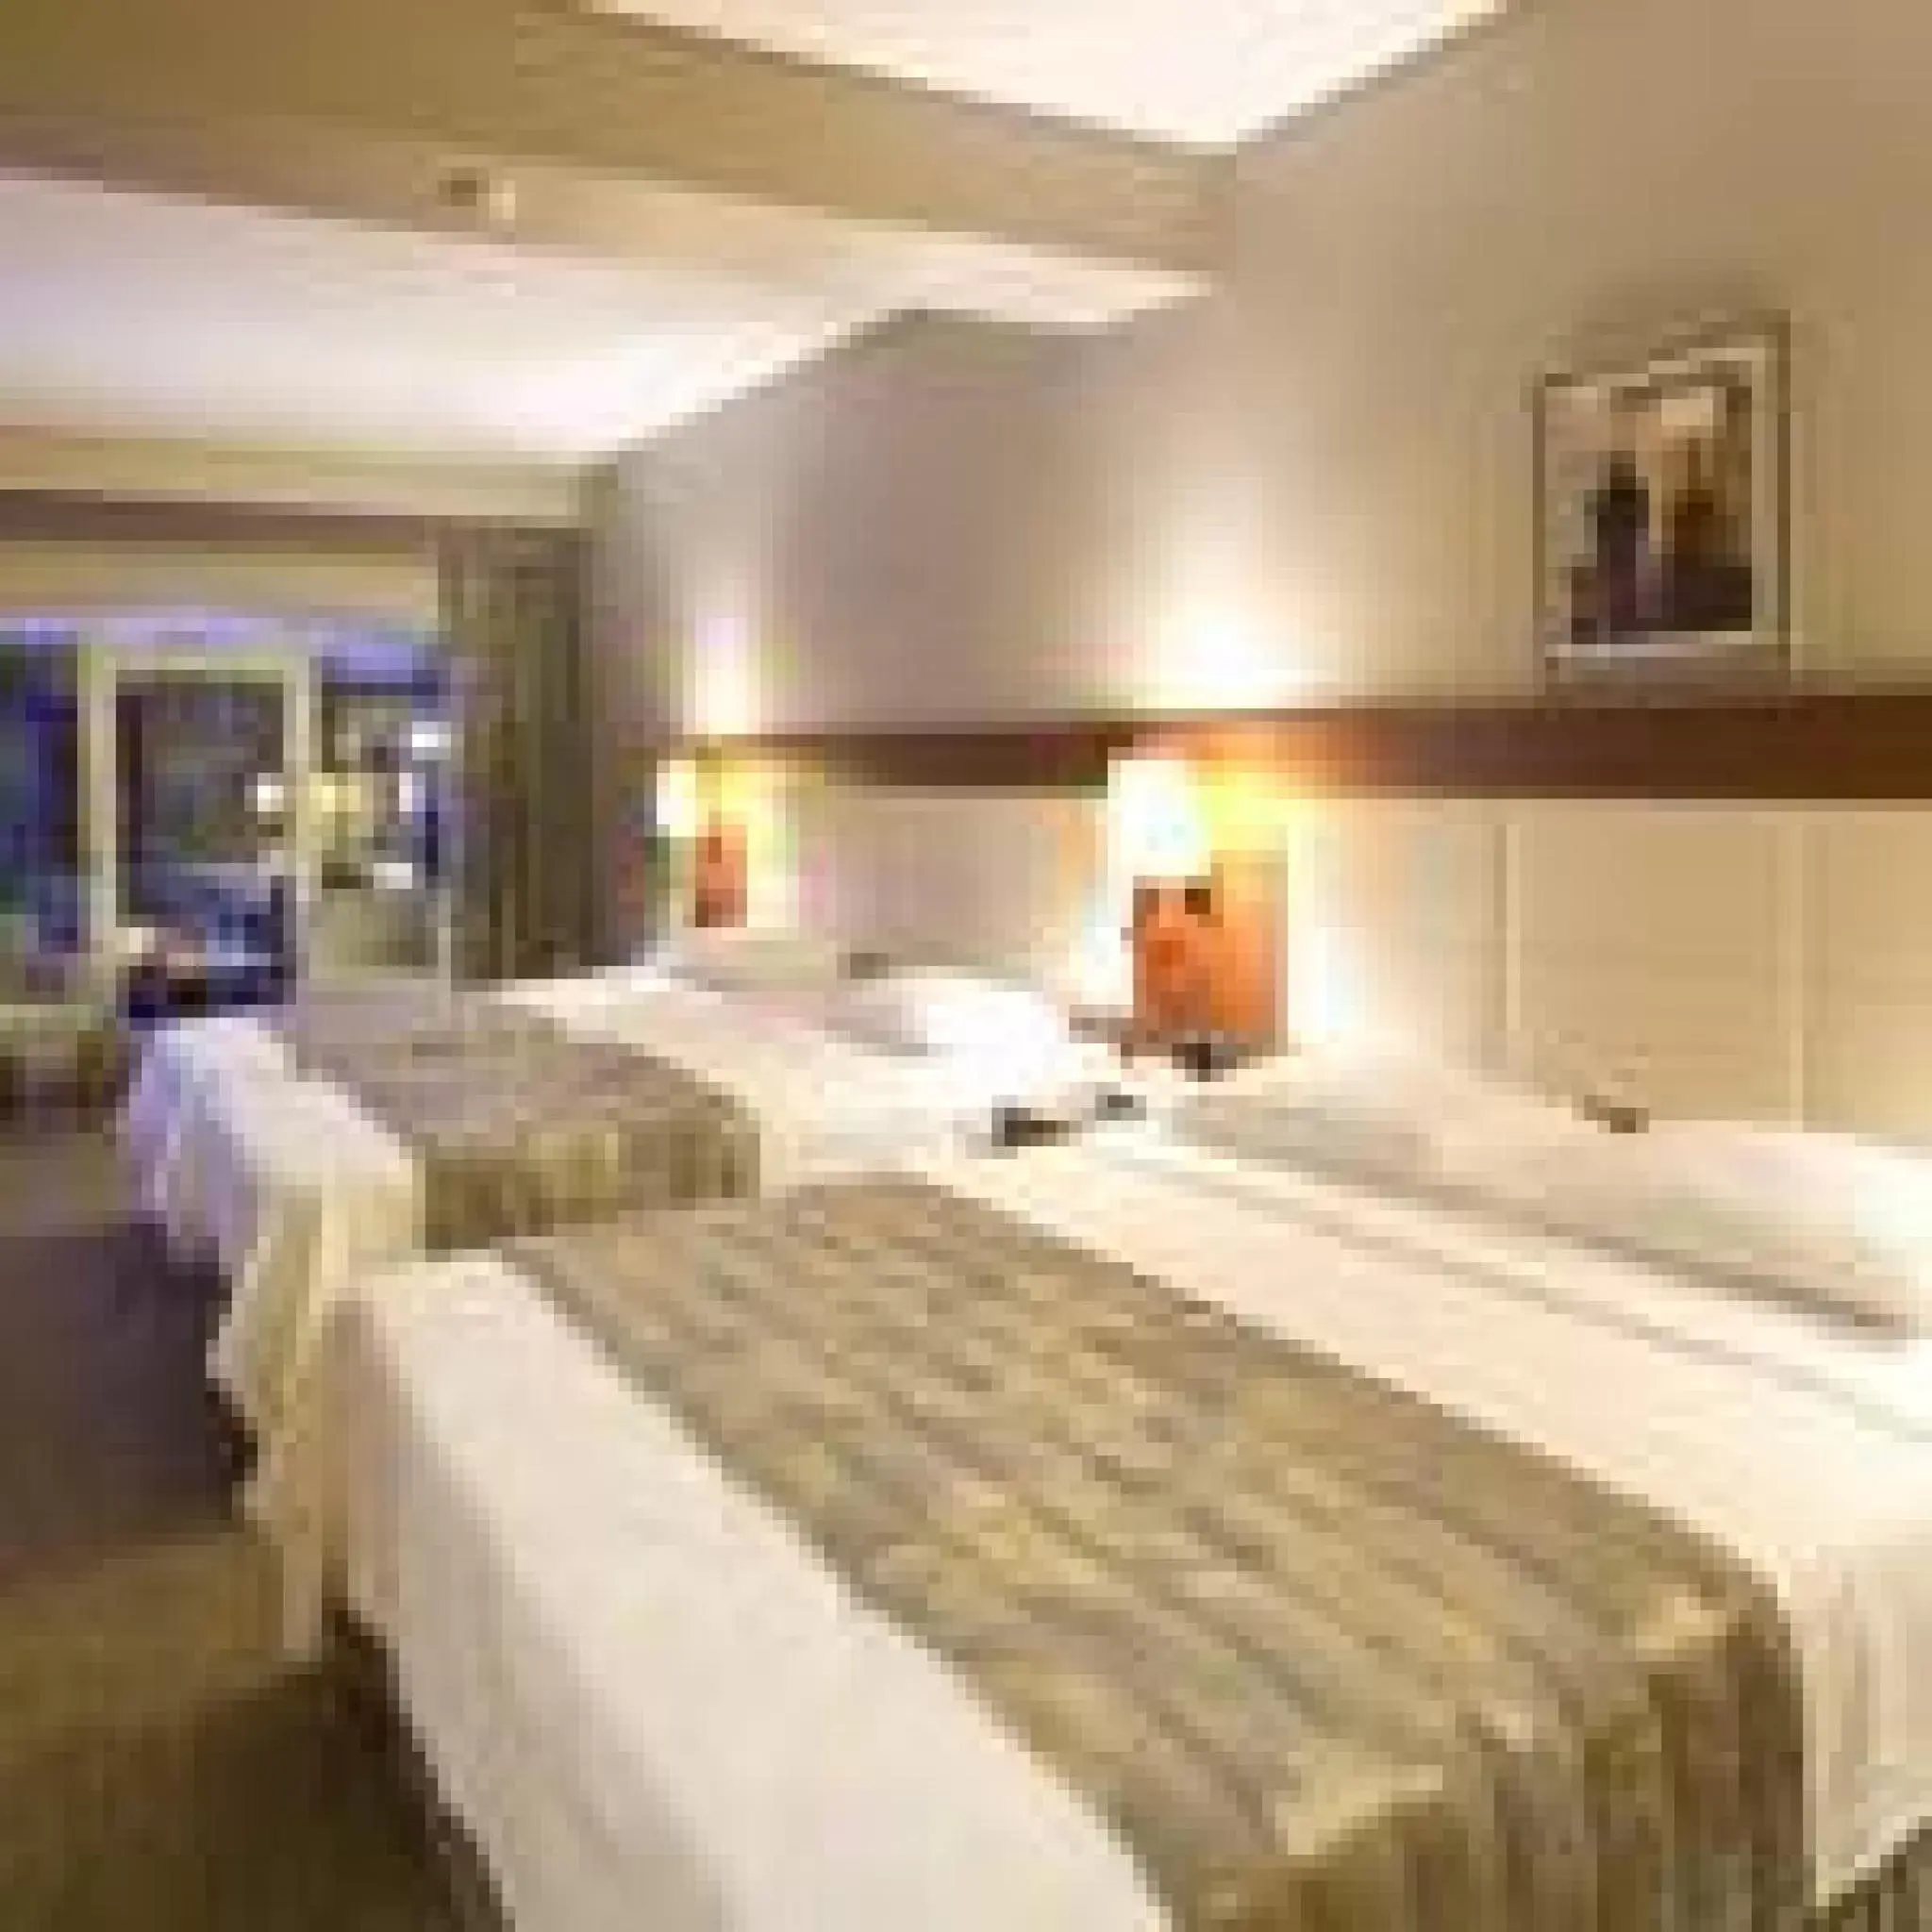 Bed in Innpera Hotel